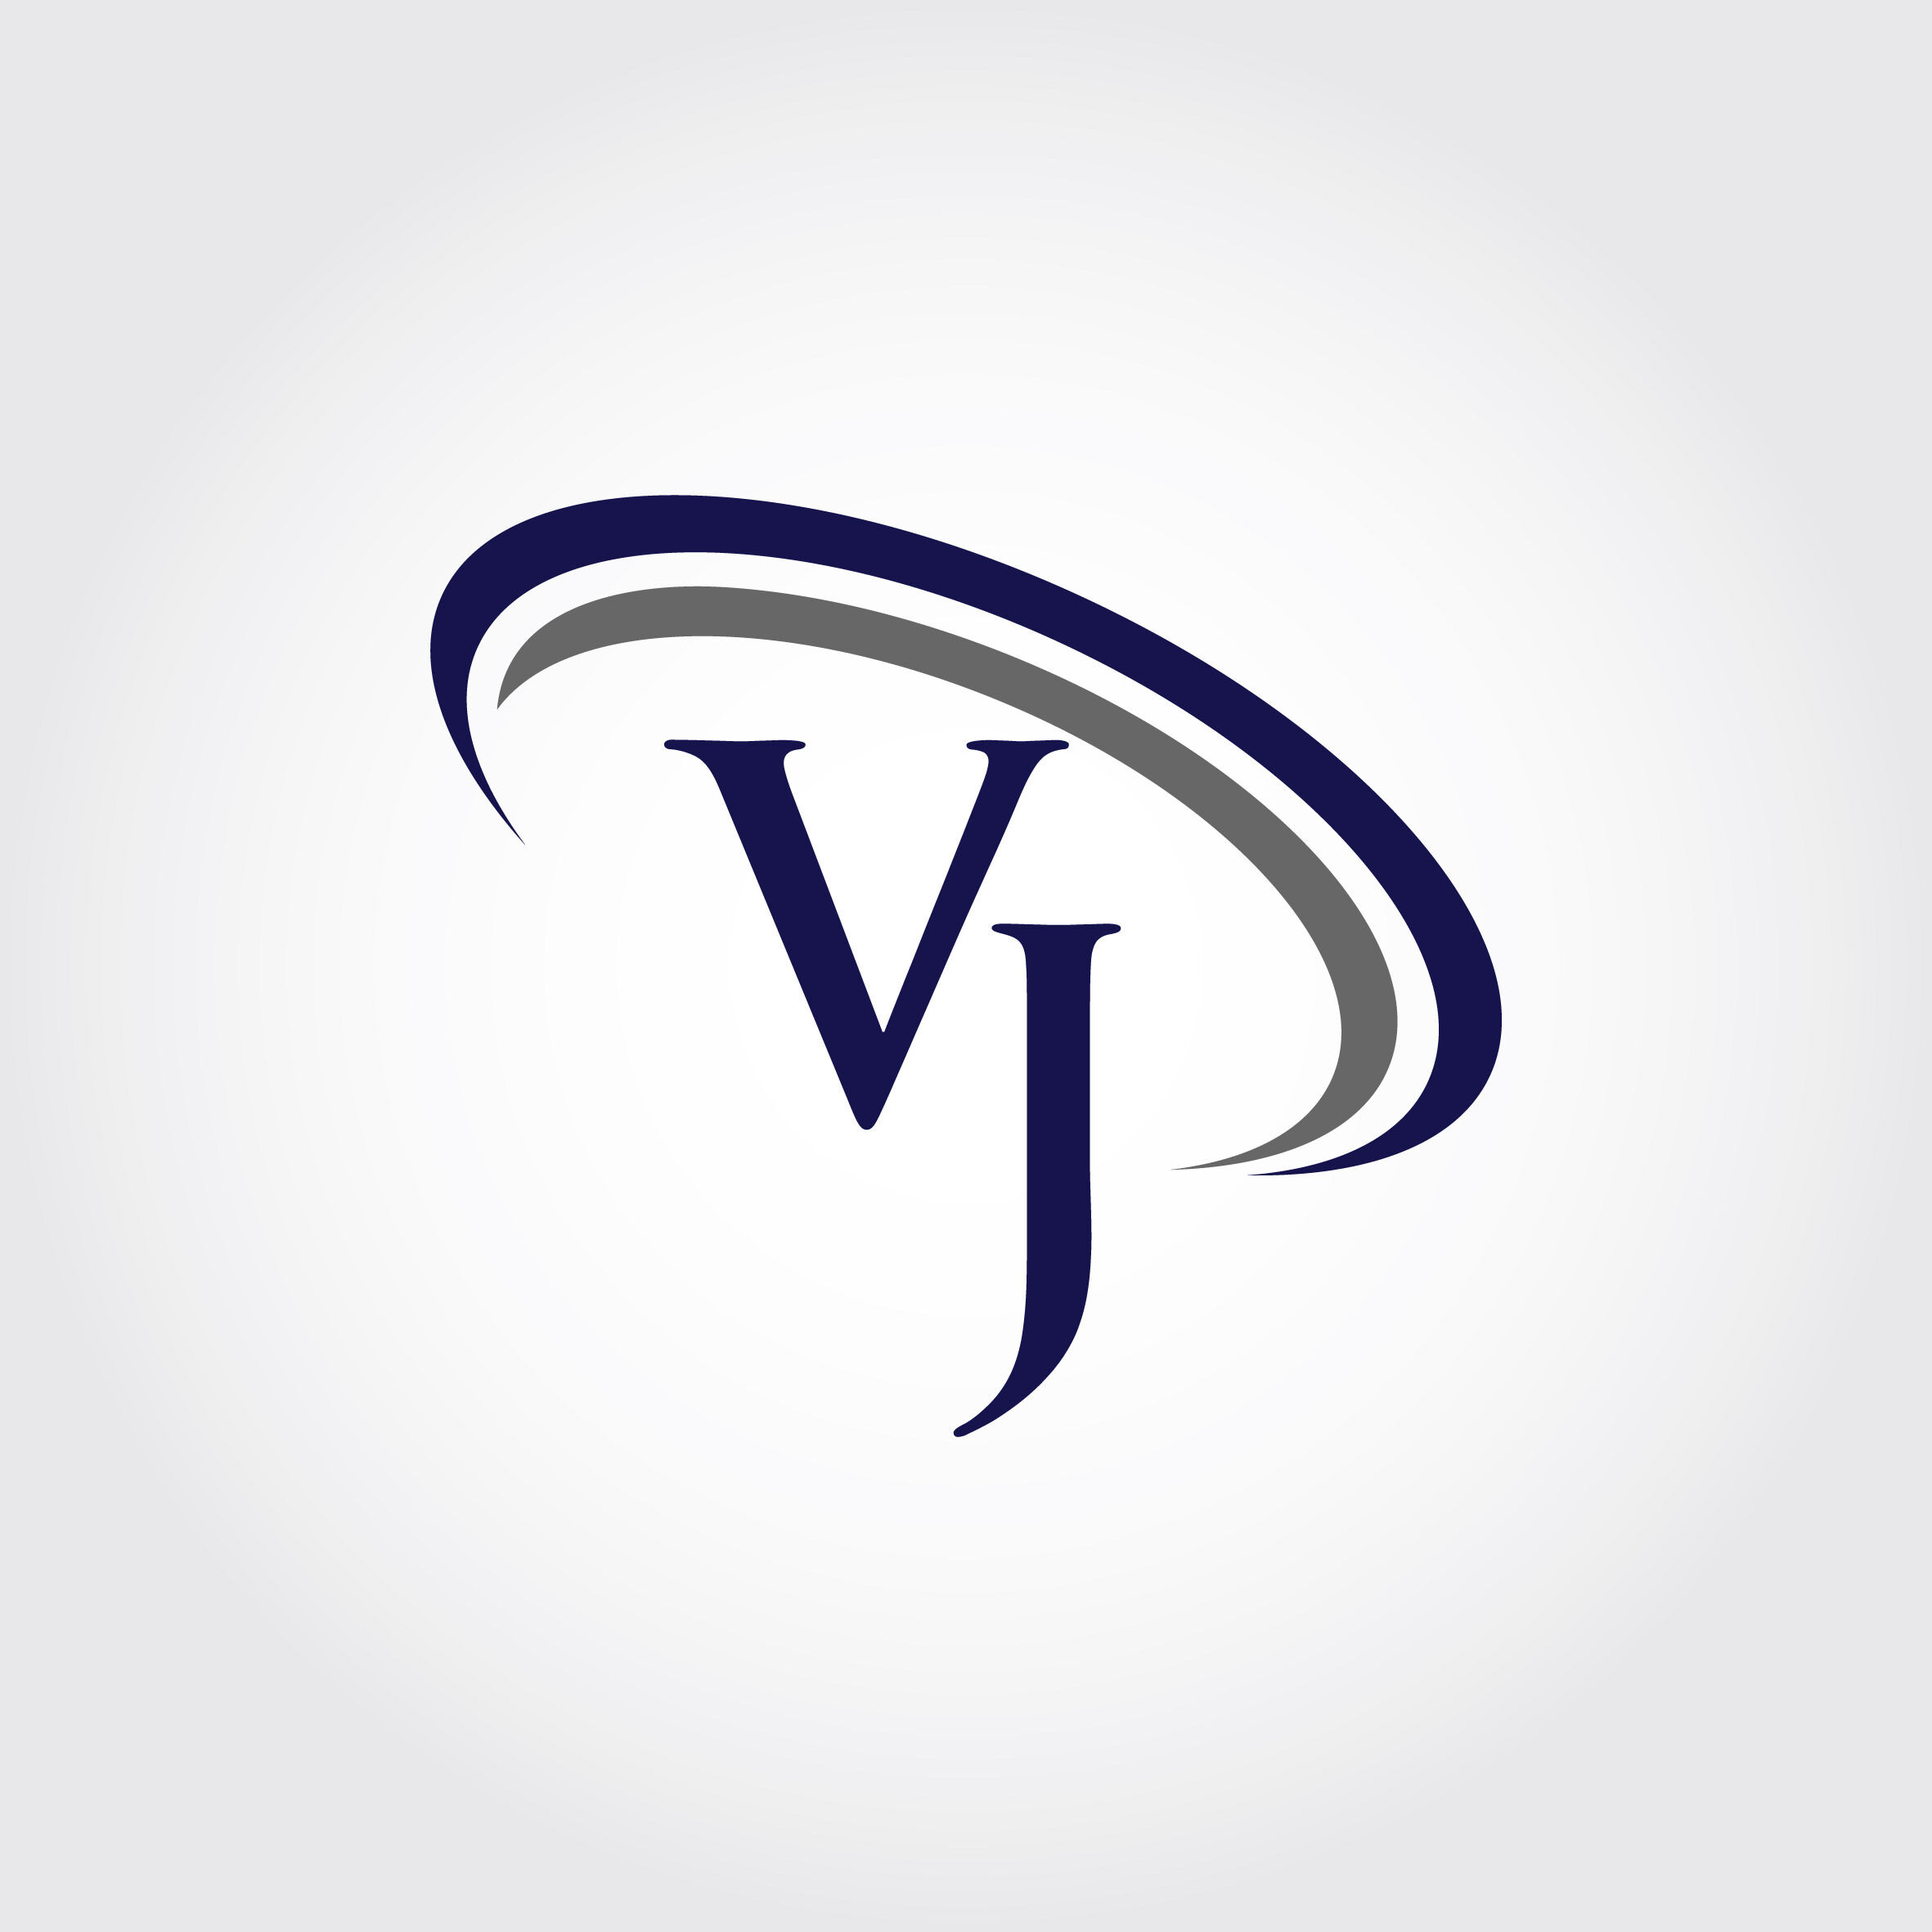 Monogram VJ Logo V2 Graphic by Greenlines Studios · Creative Fabrica